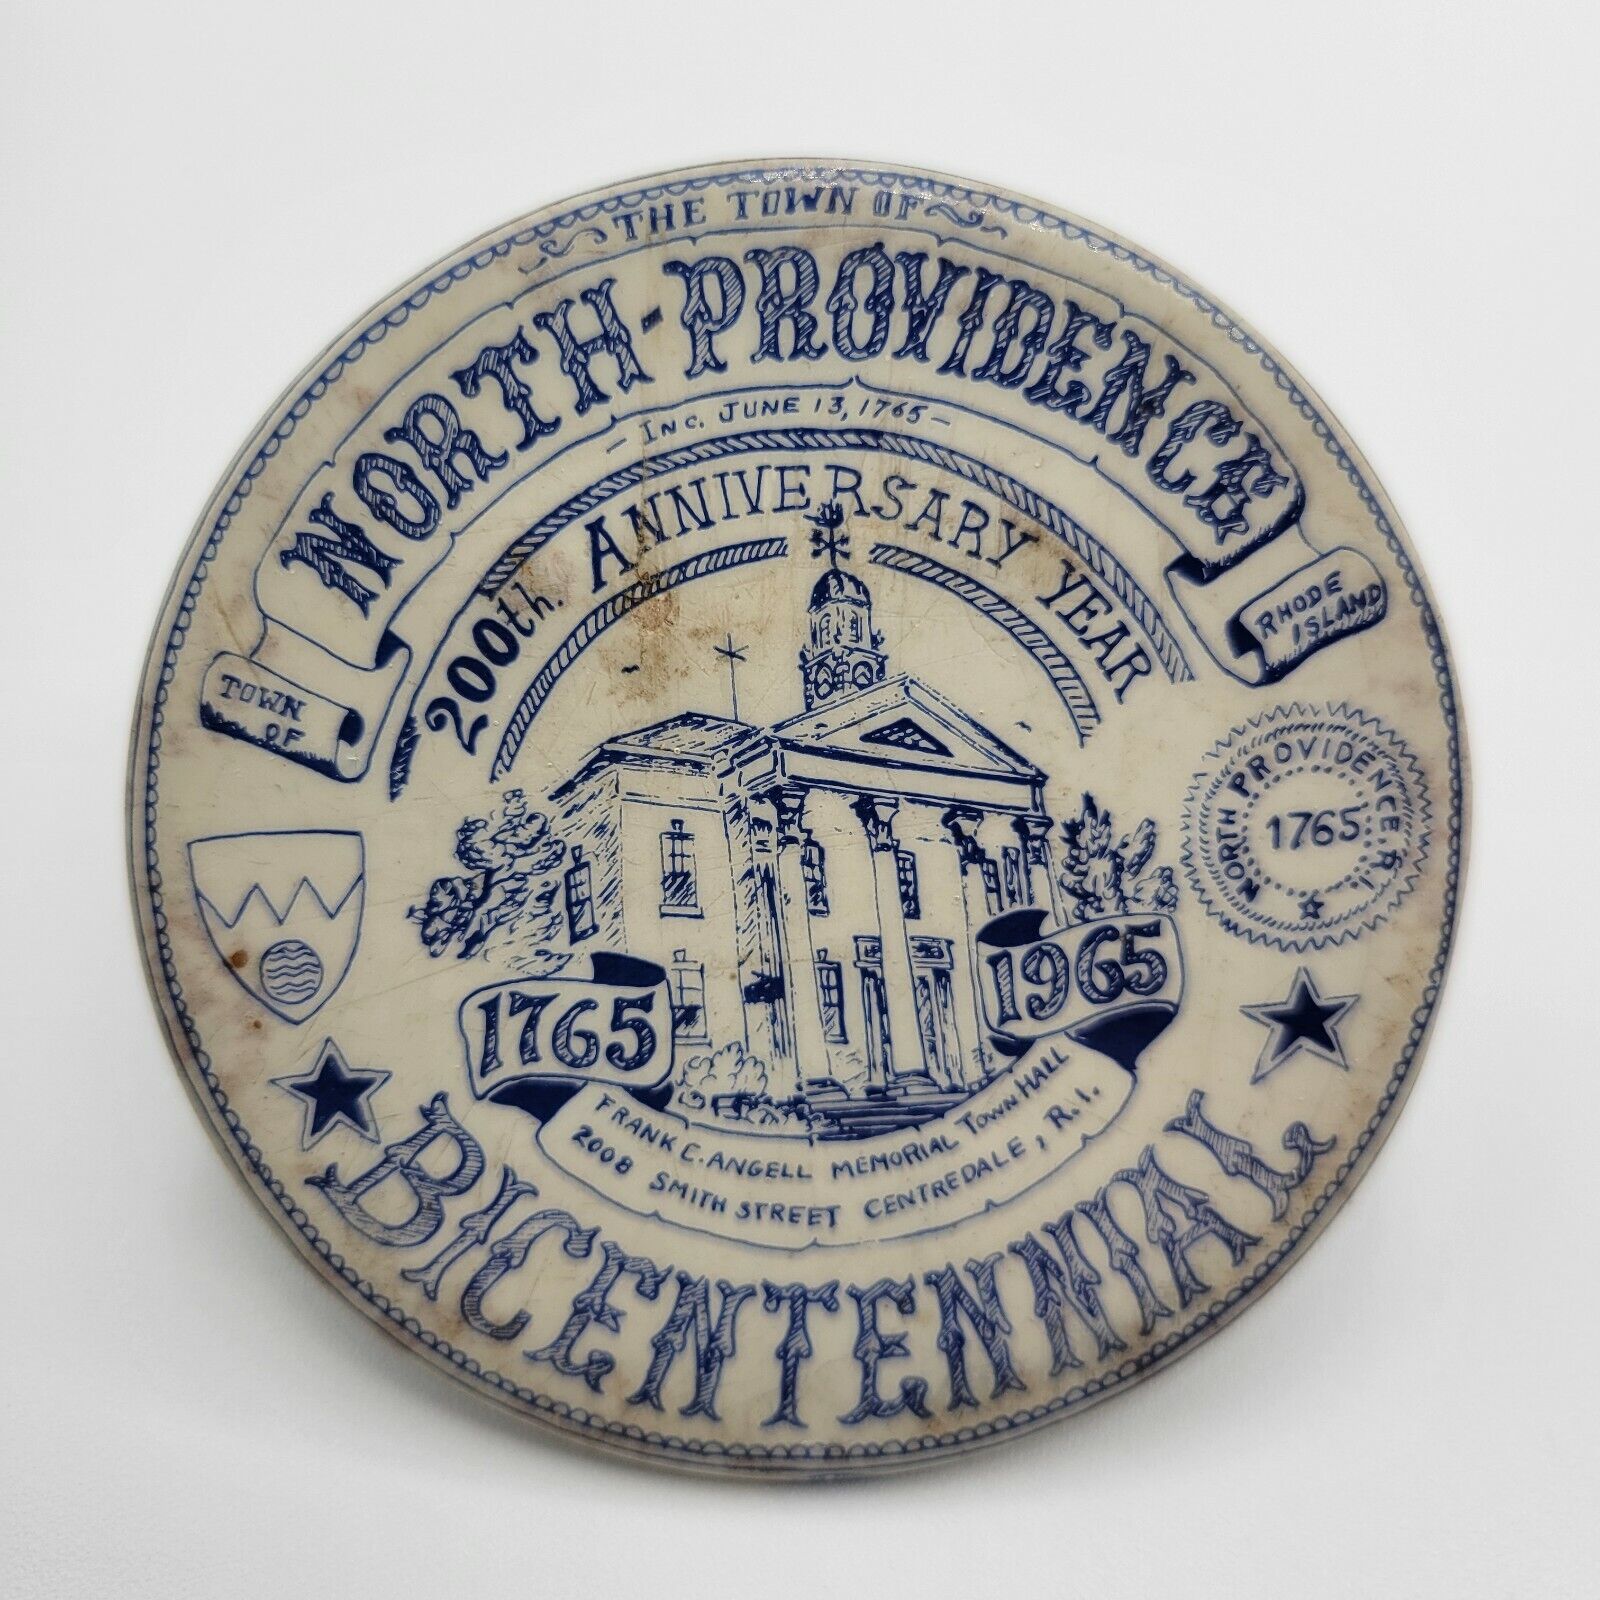 North Providence Rhode Island Bicentennial Button Pin 